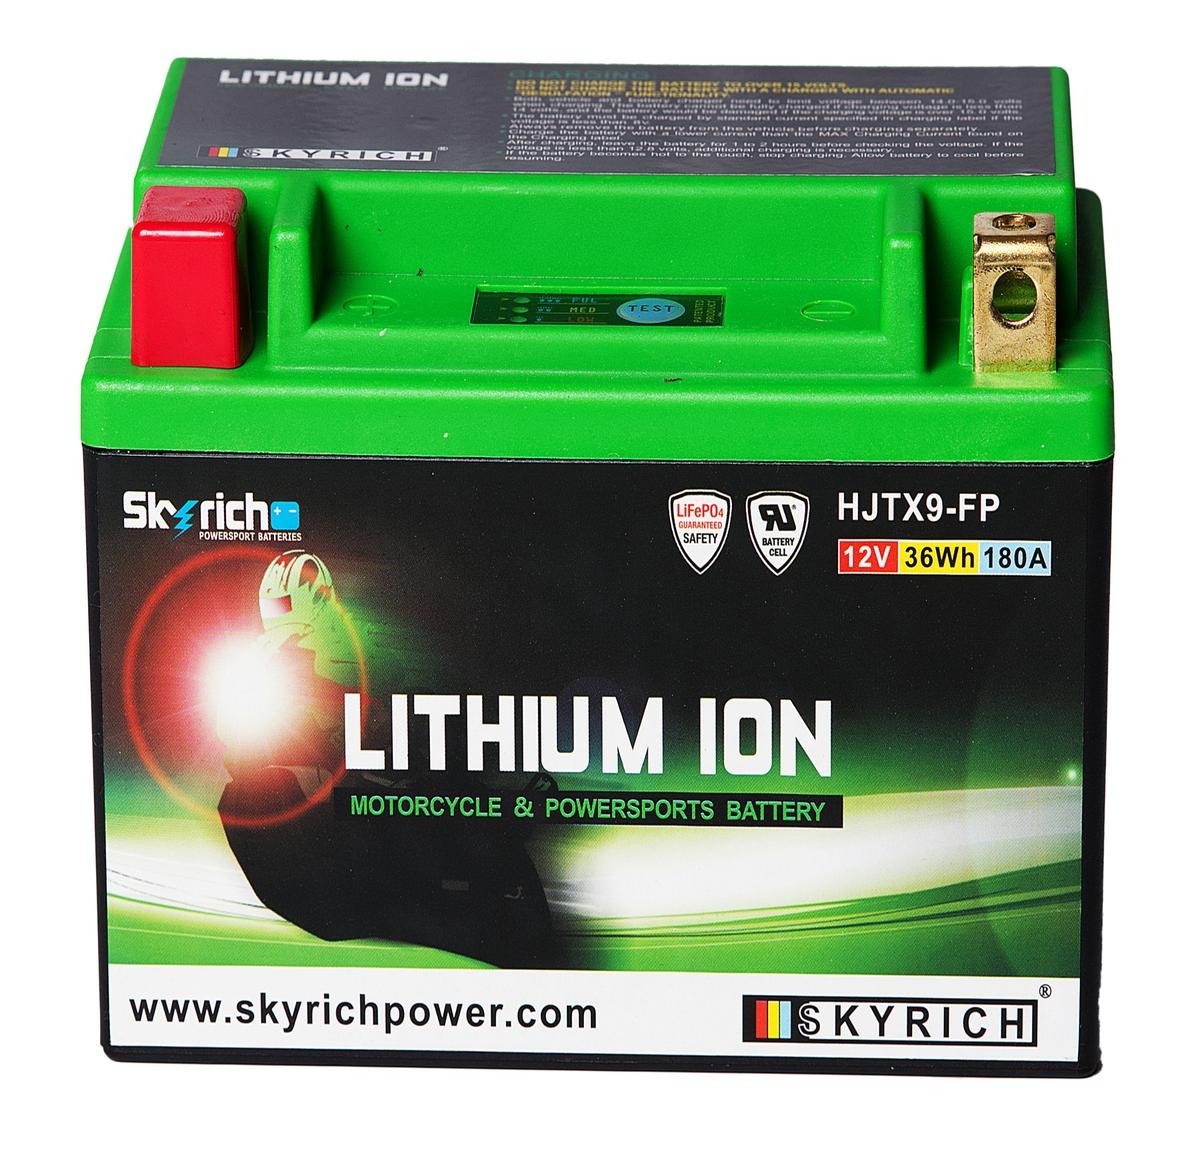 KAWASAKI NINJA Batterie 12V 3Ah 180A N Li-Ionen-Batterie SKYRICH LITHIUM ION HJTX9-FP